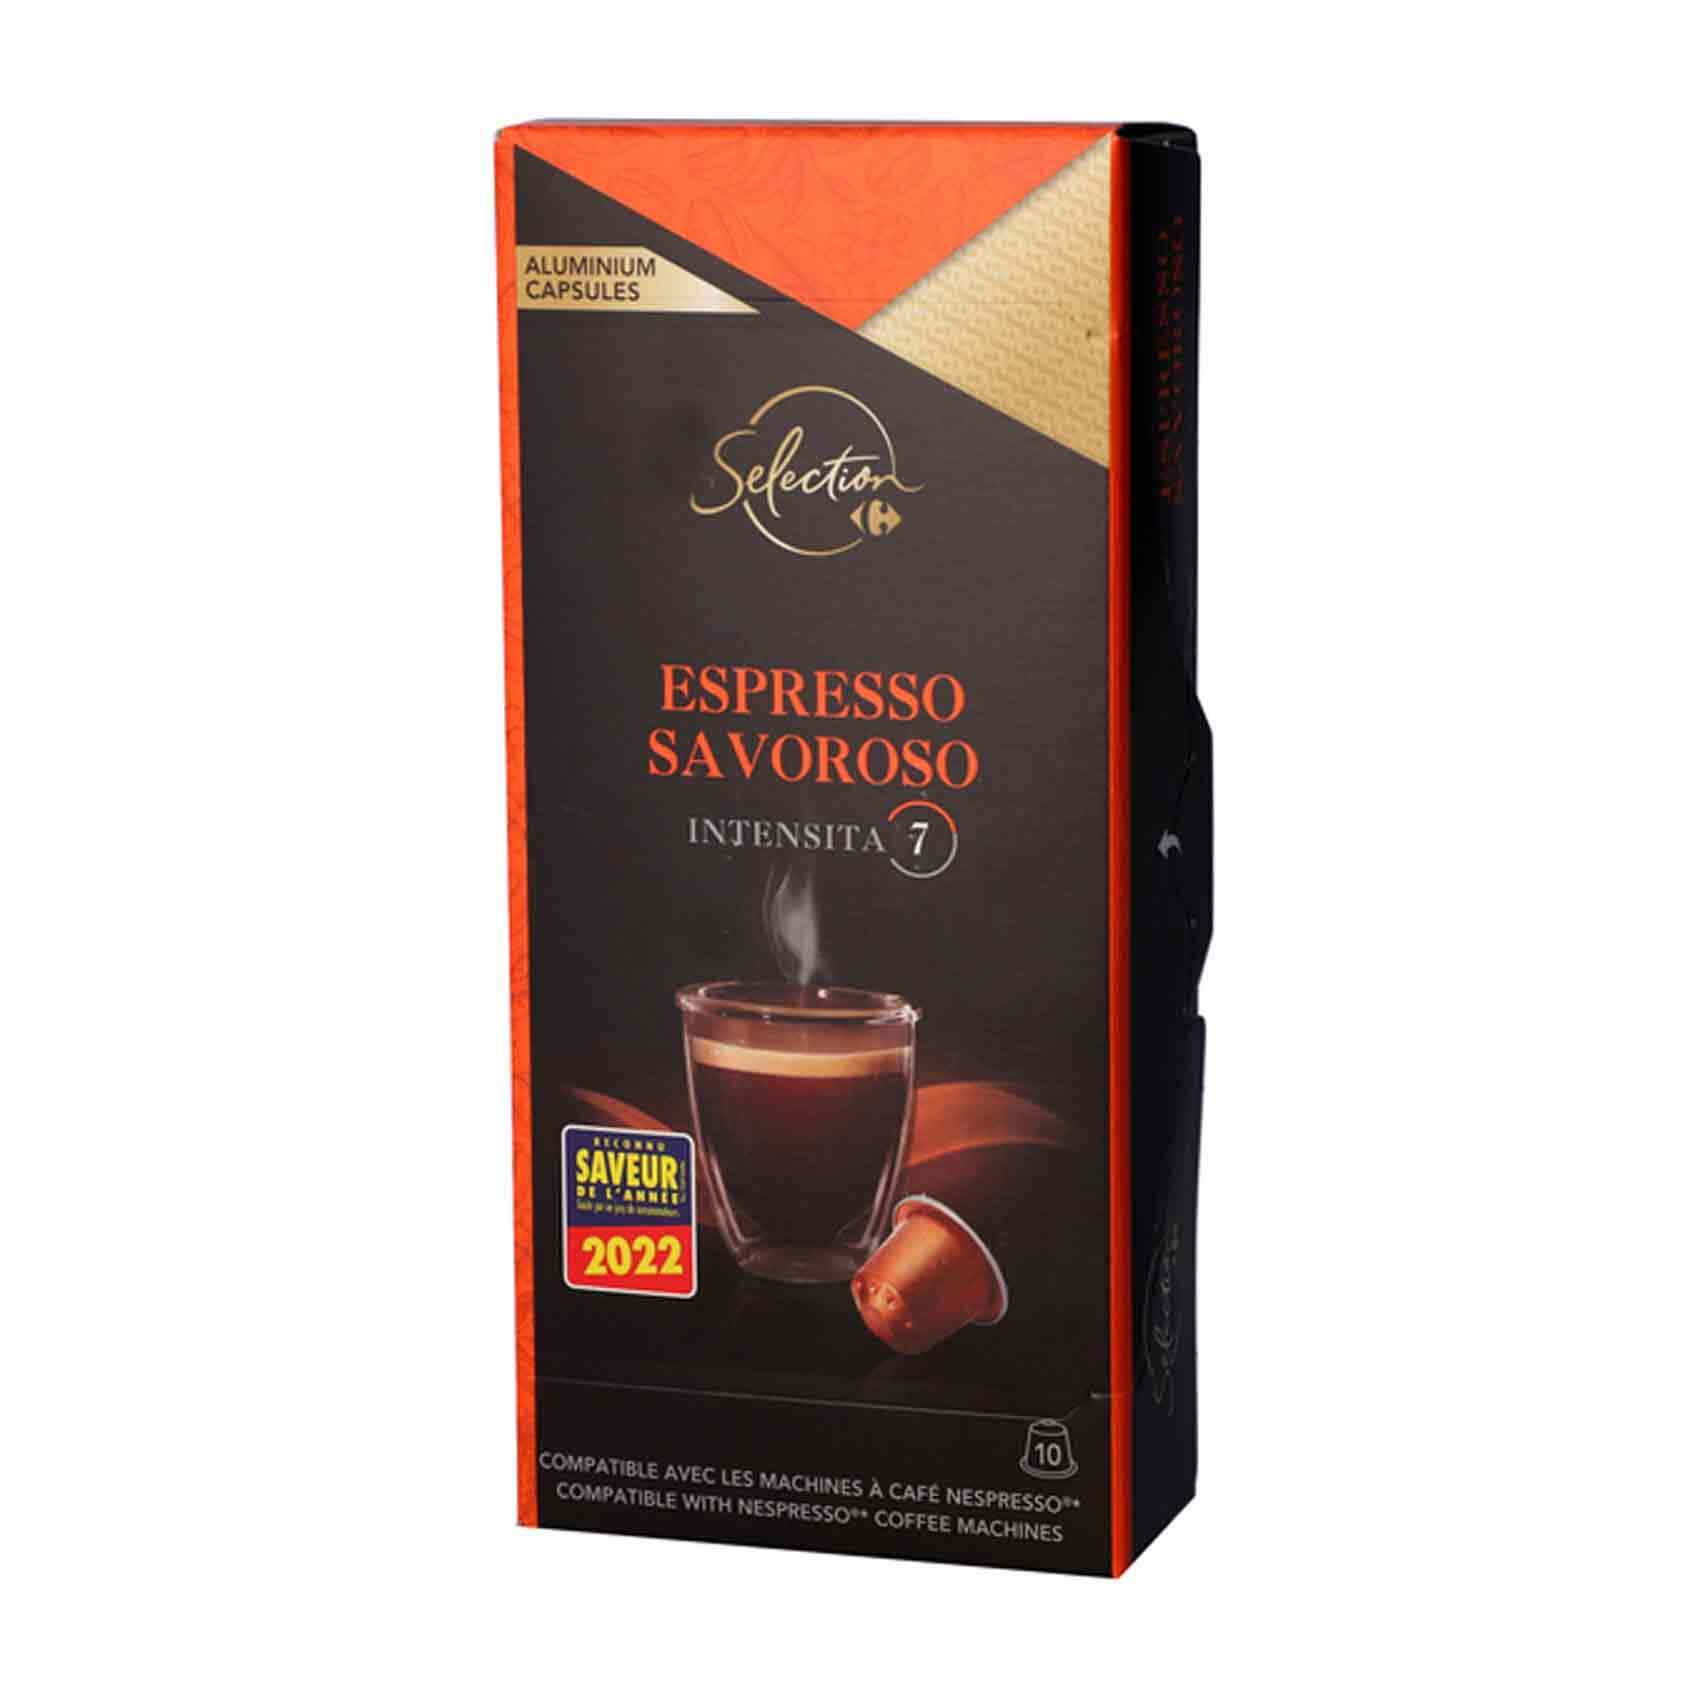 Buy Carrefour Selection Espresso Savoroso Capsules, Intensity7, 10Capsules  Online - Shop Beverages on Carrefour Saudi Arabia